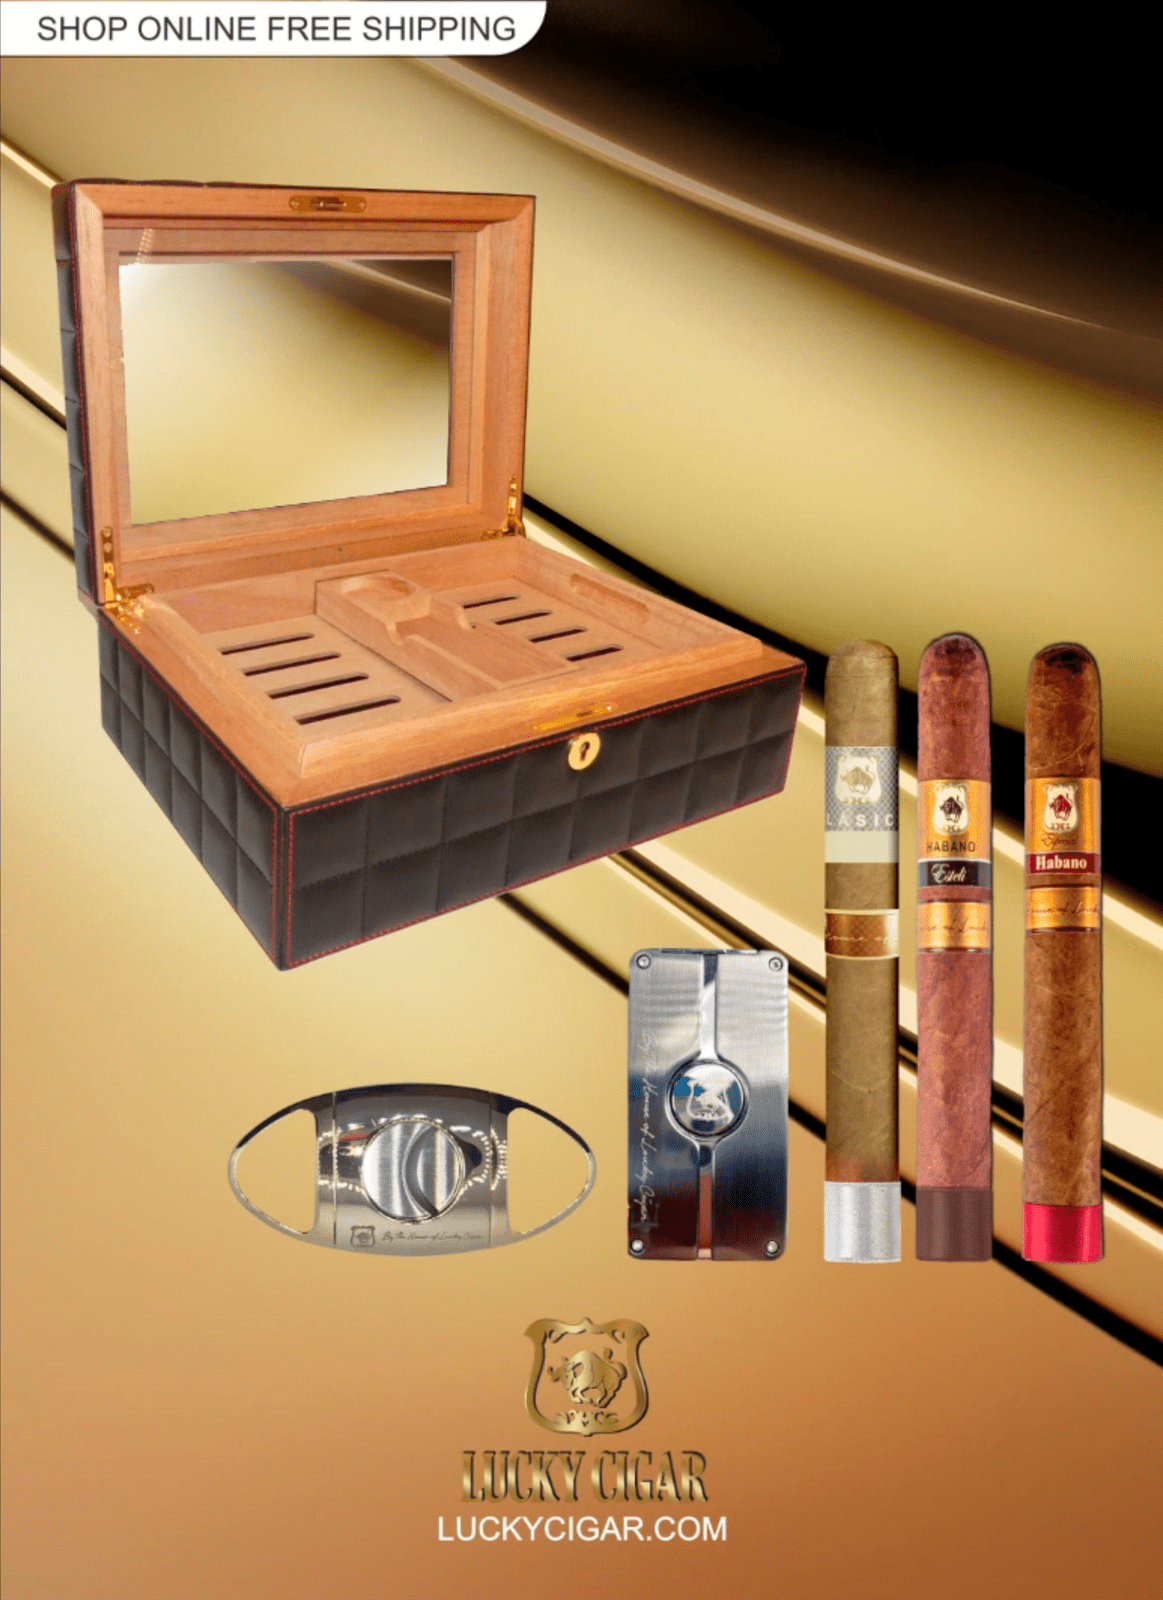 Lucky Cigar Sampler Sets: Set of 3 Toro Cigars with Torch, Cutter, Desk Humidor